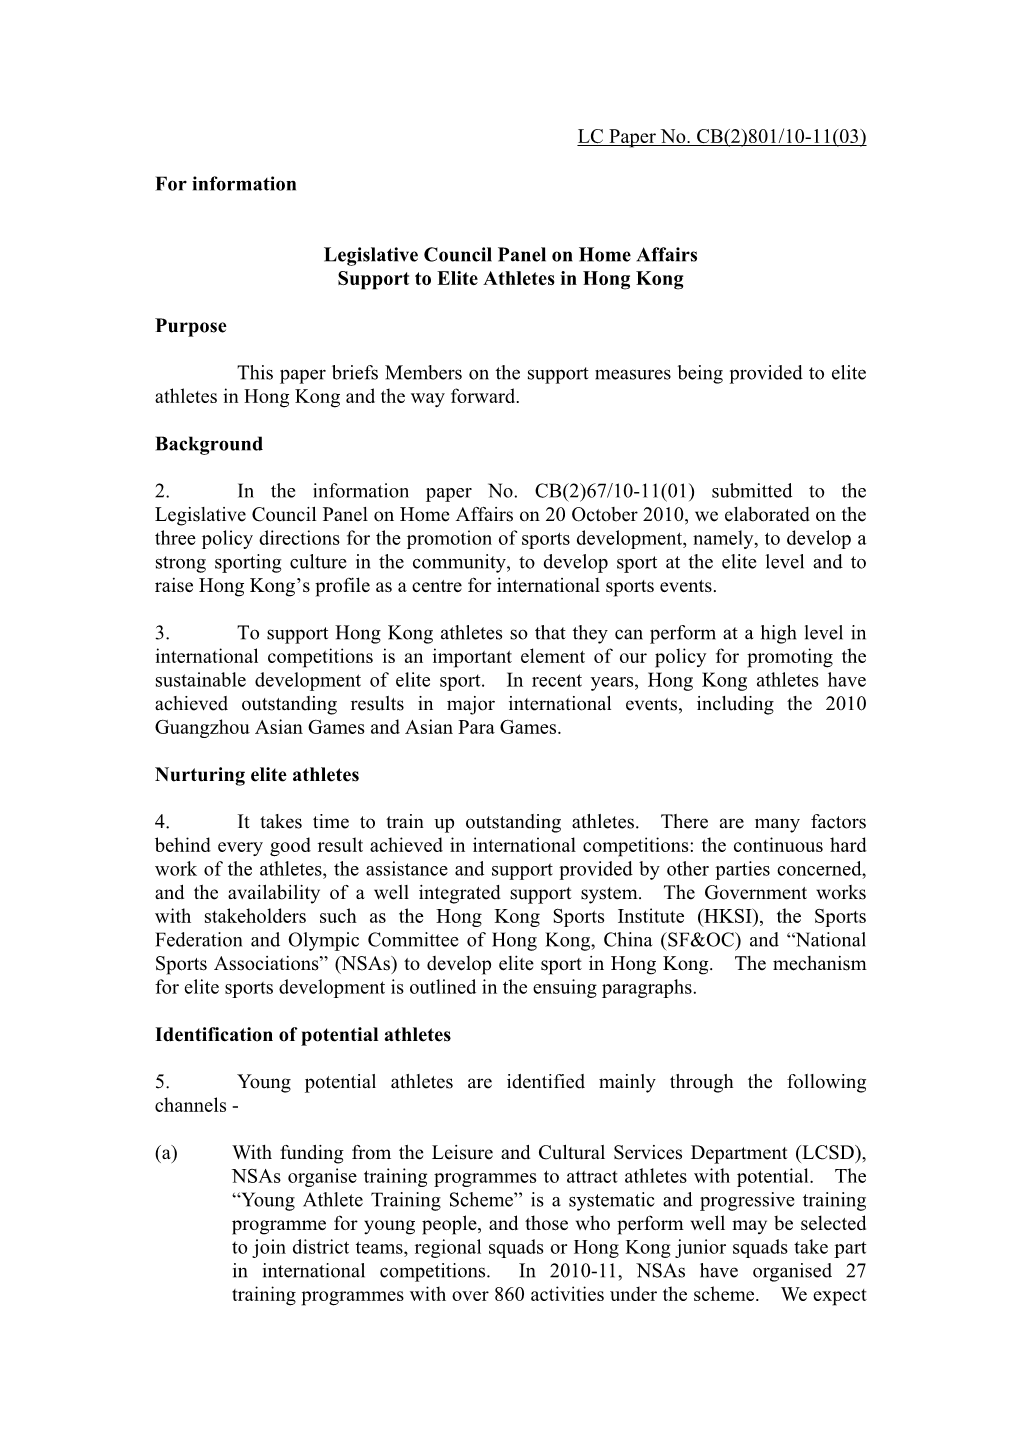 LC Paper No. CB(2)801/10-11(03) for Information Legislative Council